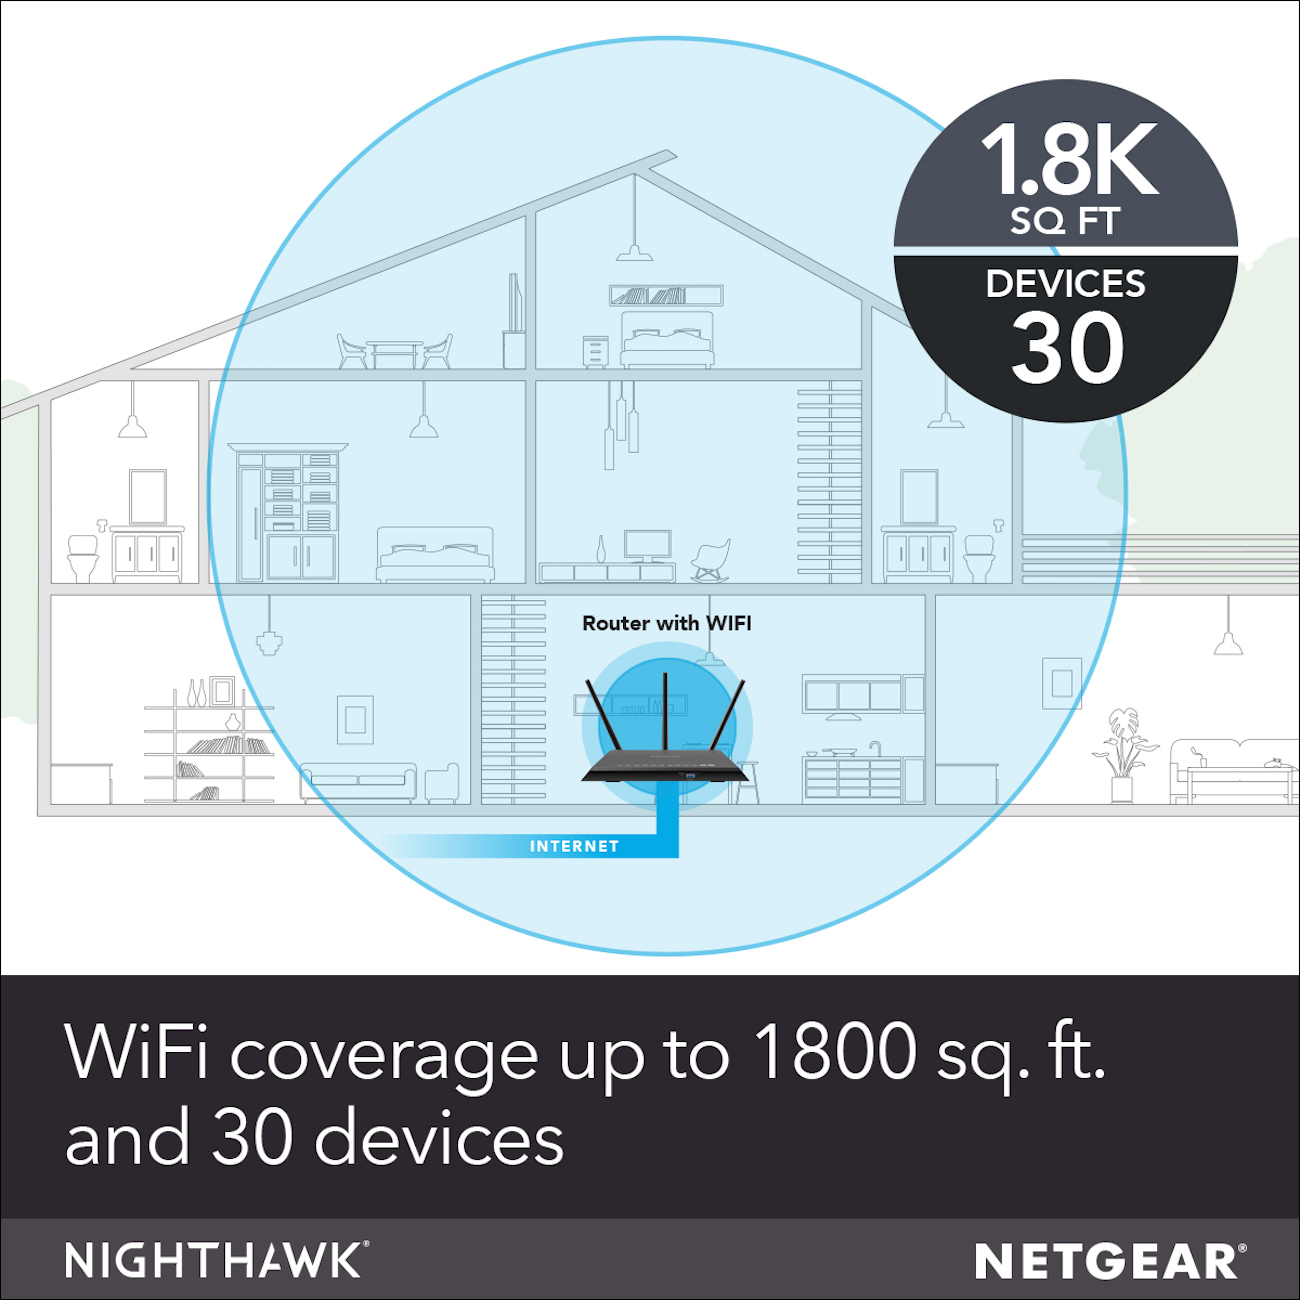 NETGEAR - Nighthawk R7000 AC1900 Smart WiFi Router - image 4 of 9